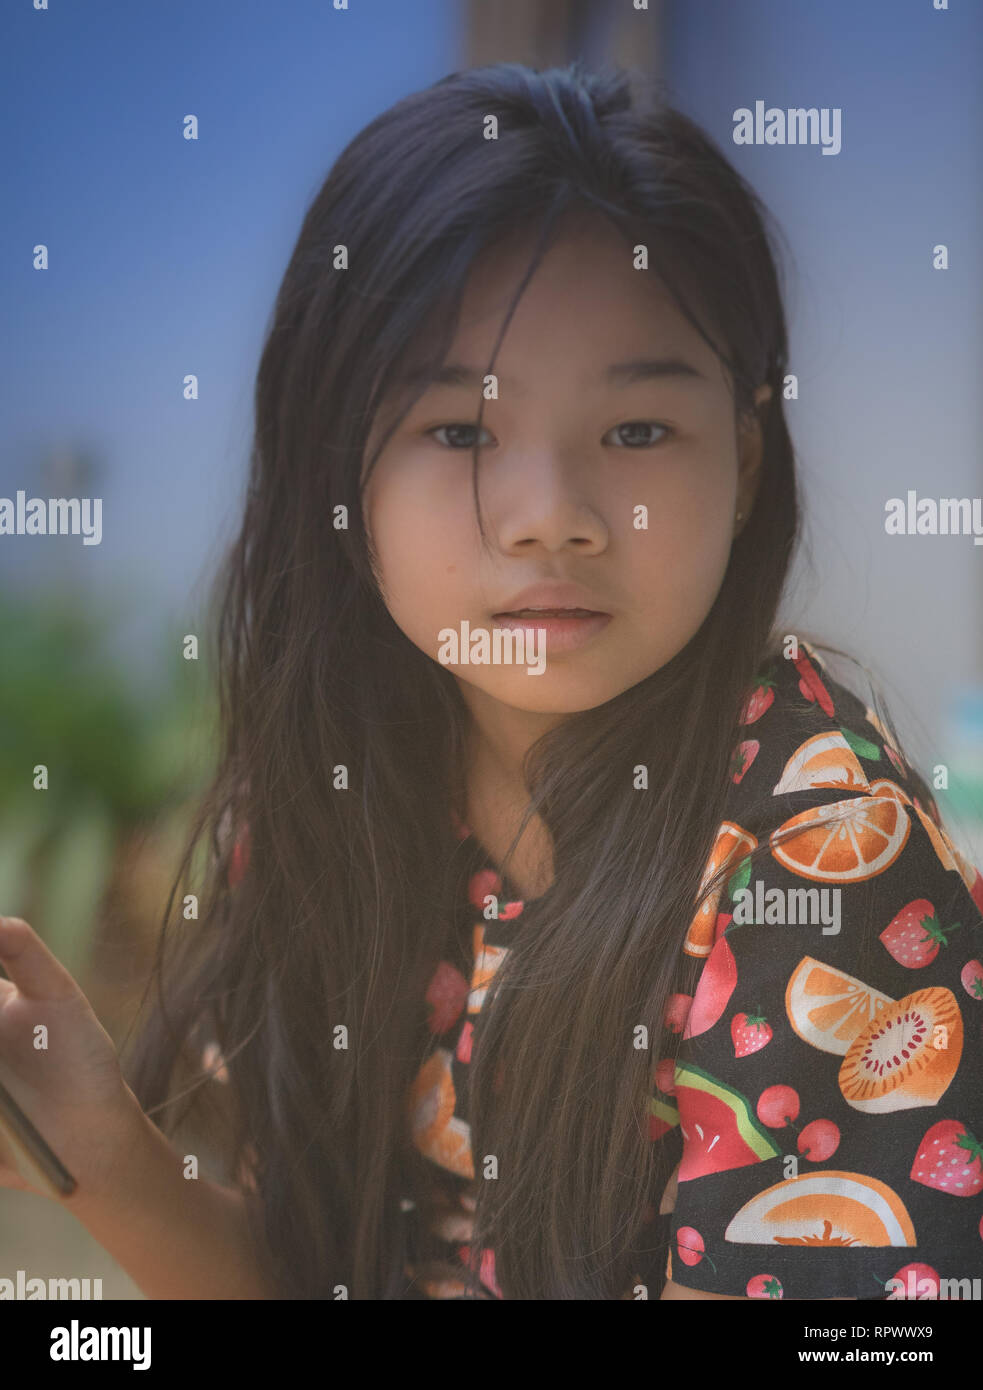 A portrait of a pretty Asian girl. Stock Photo